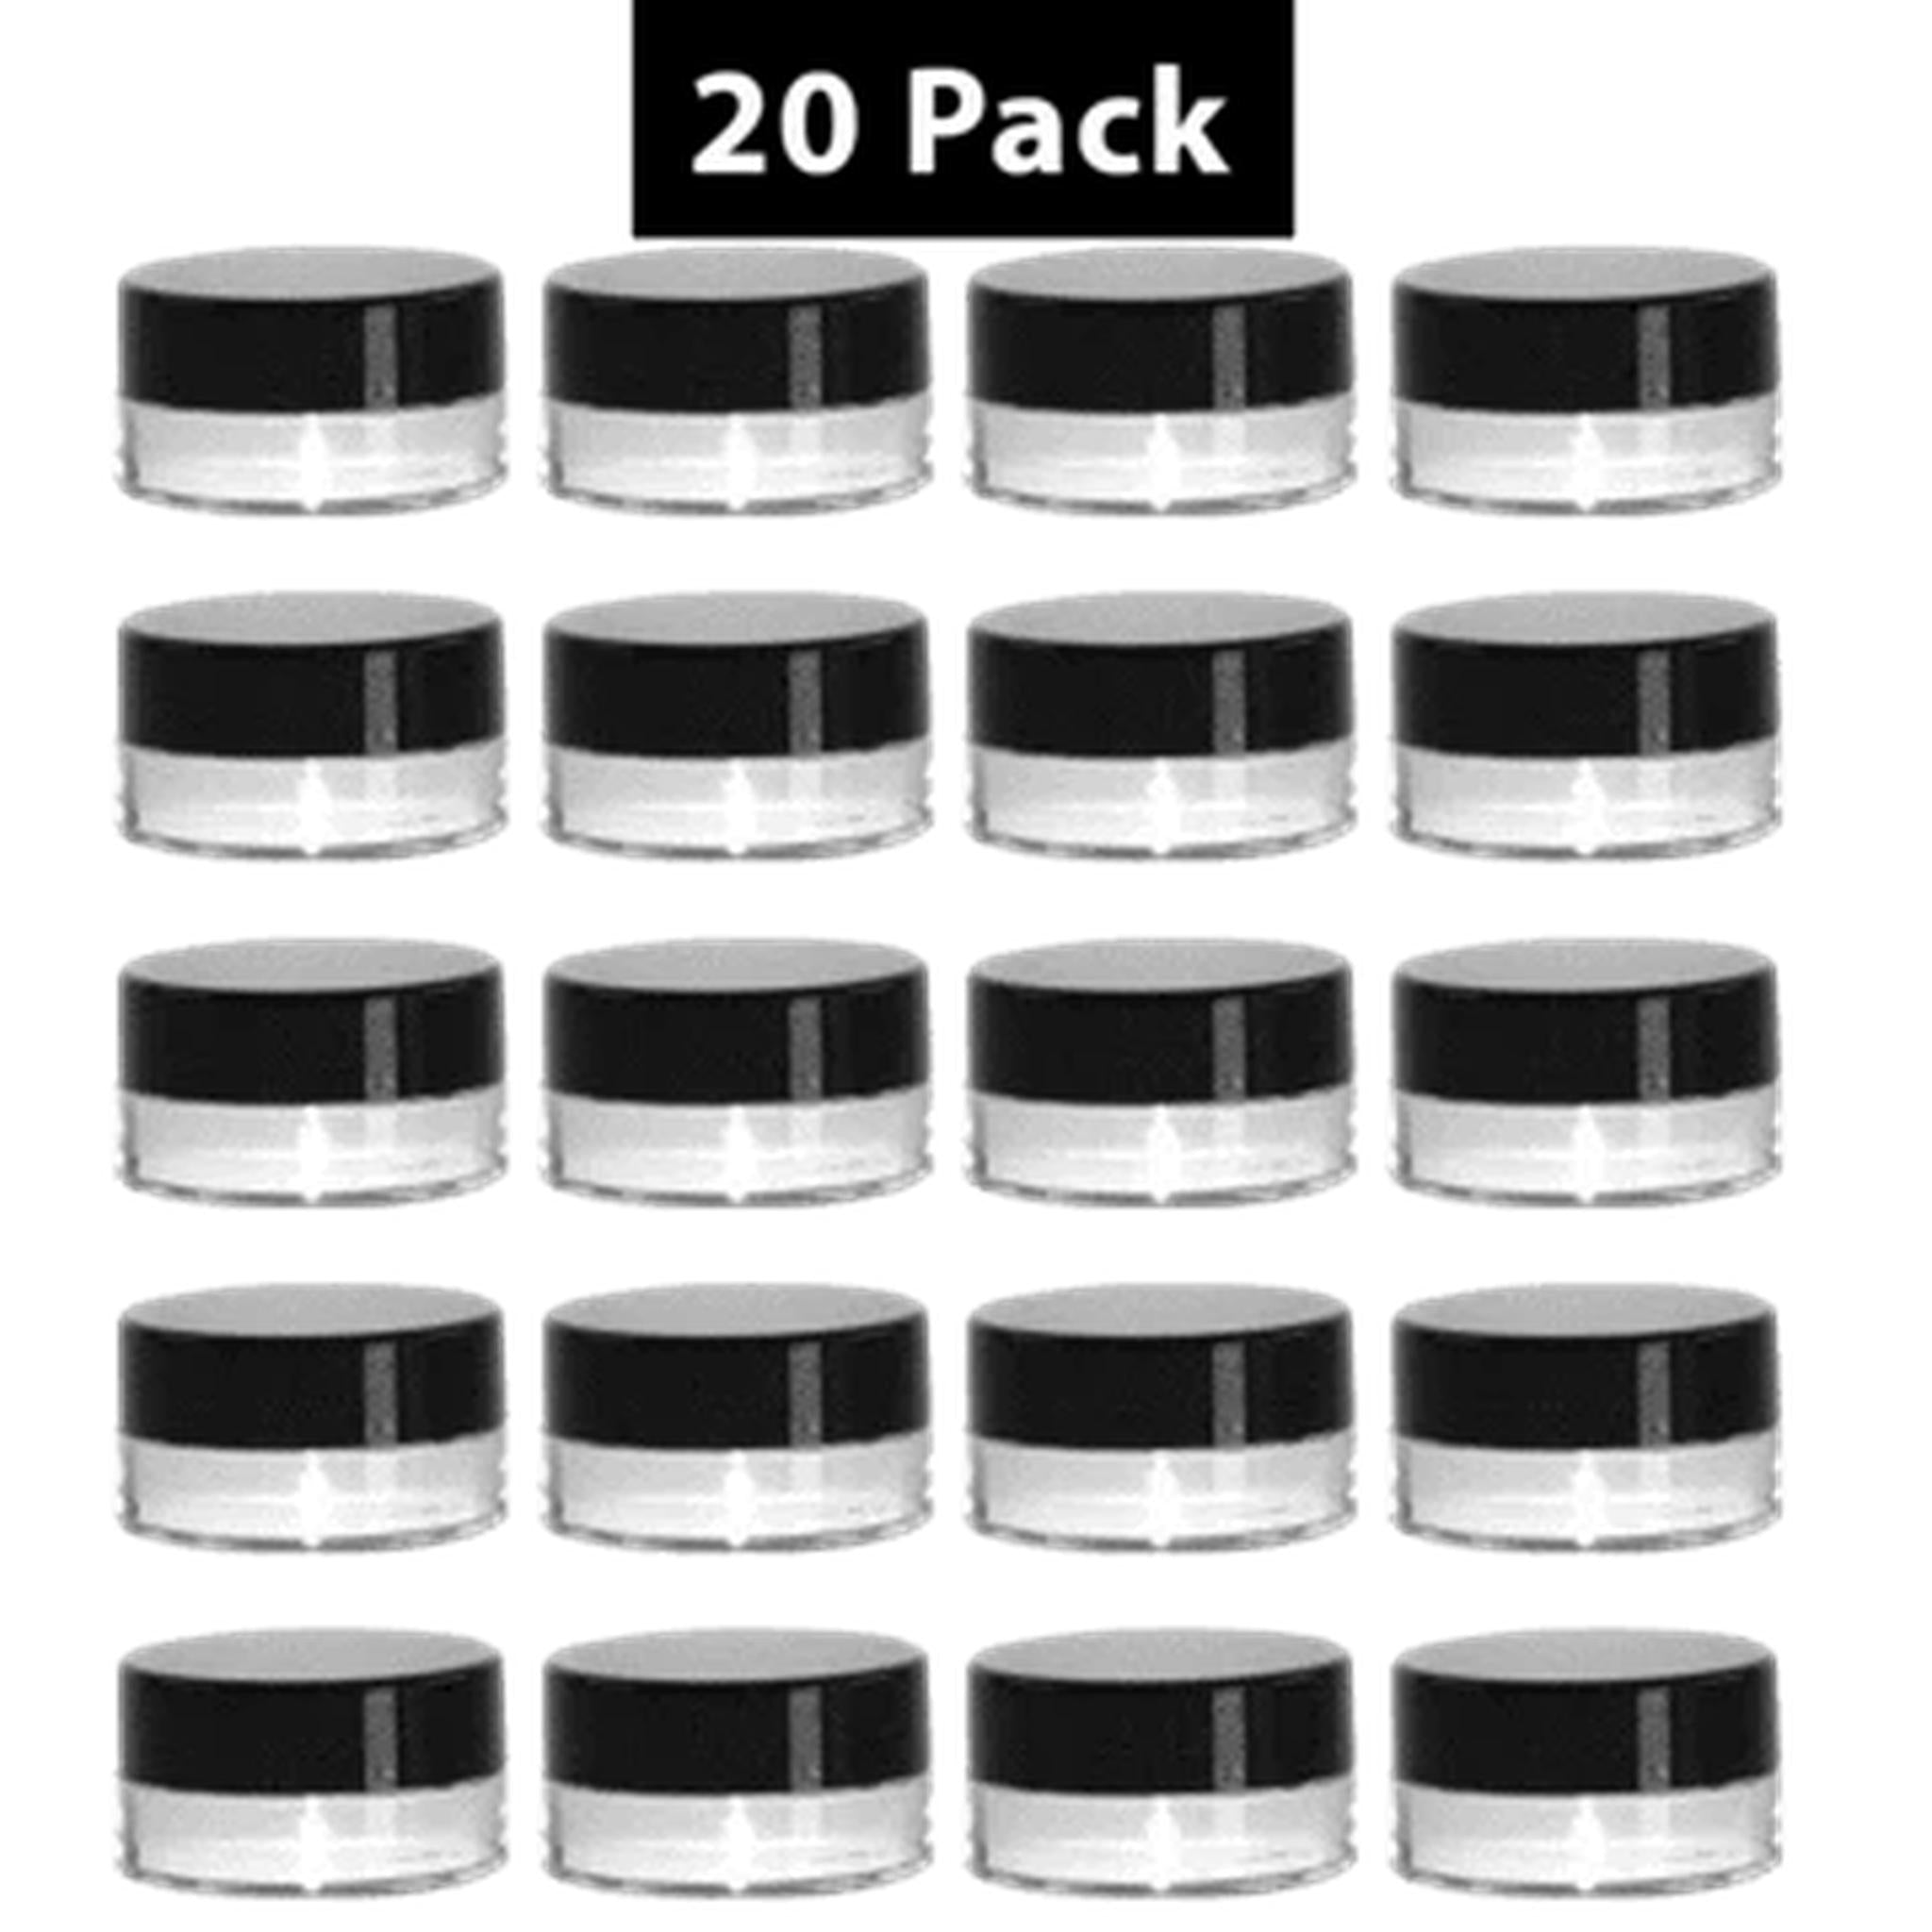 7mL Clear Glass Oval Concentrate Jar w/ Black Cap-Dab Jars-Vape Pens Wholesale